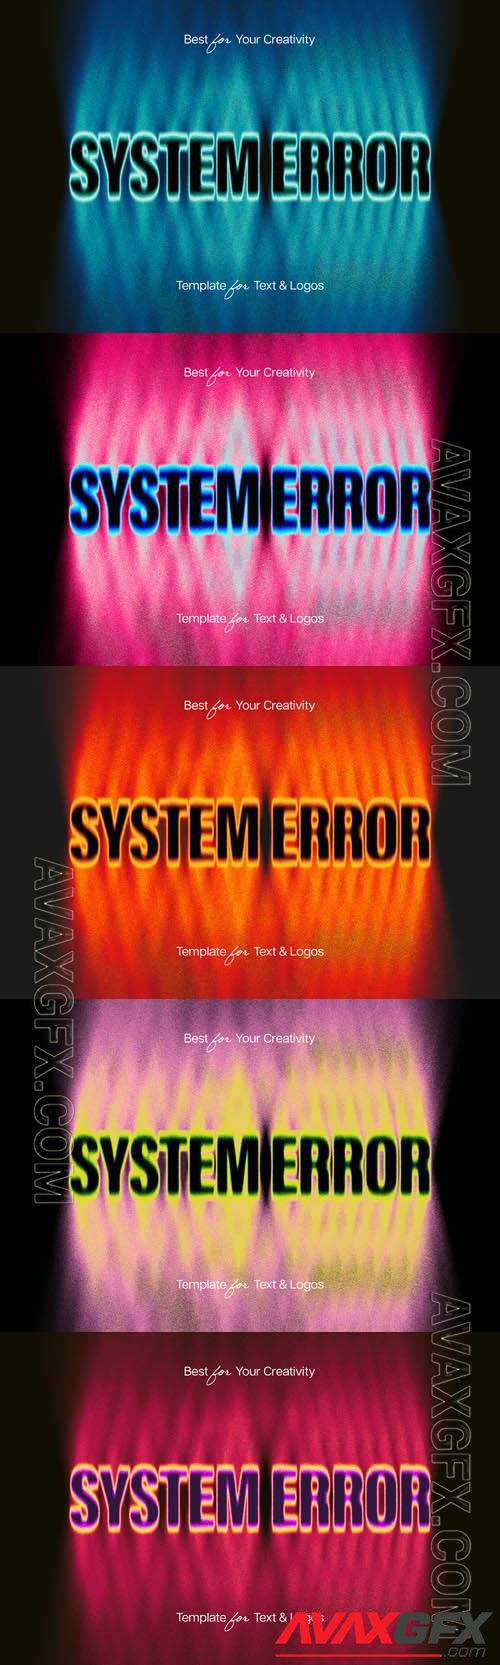 PSD vibrant system error, toxic, deformation  text effect